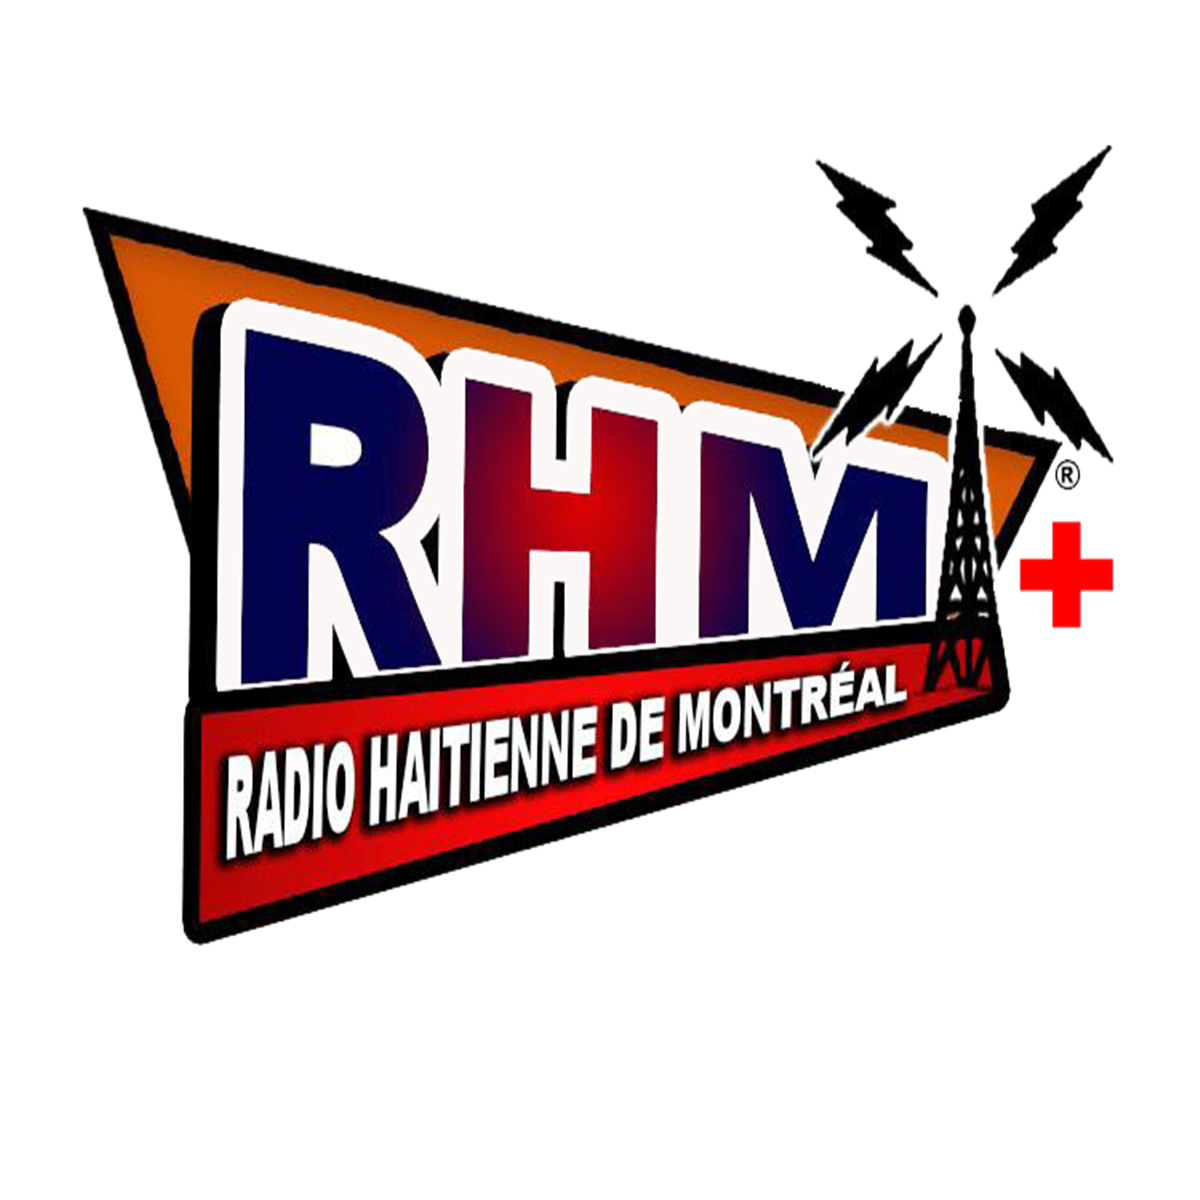 RHM-FM